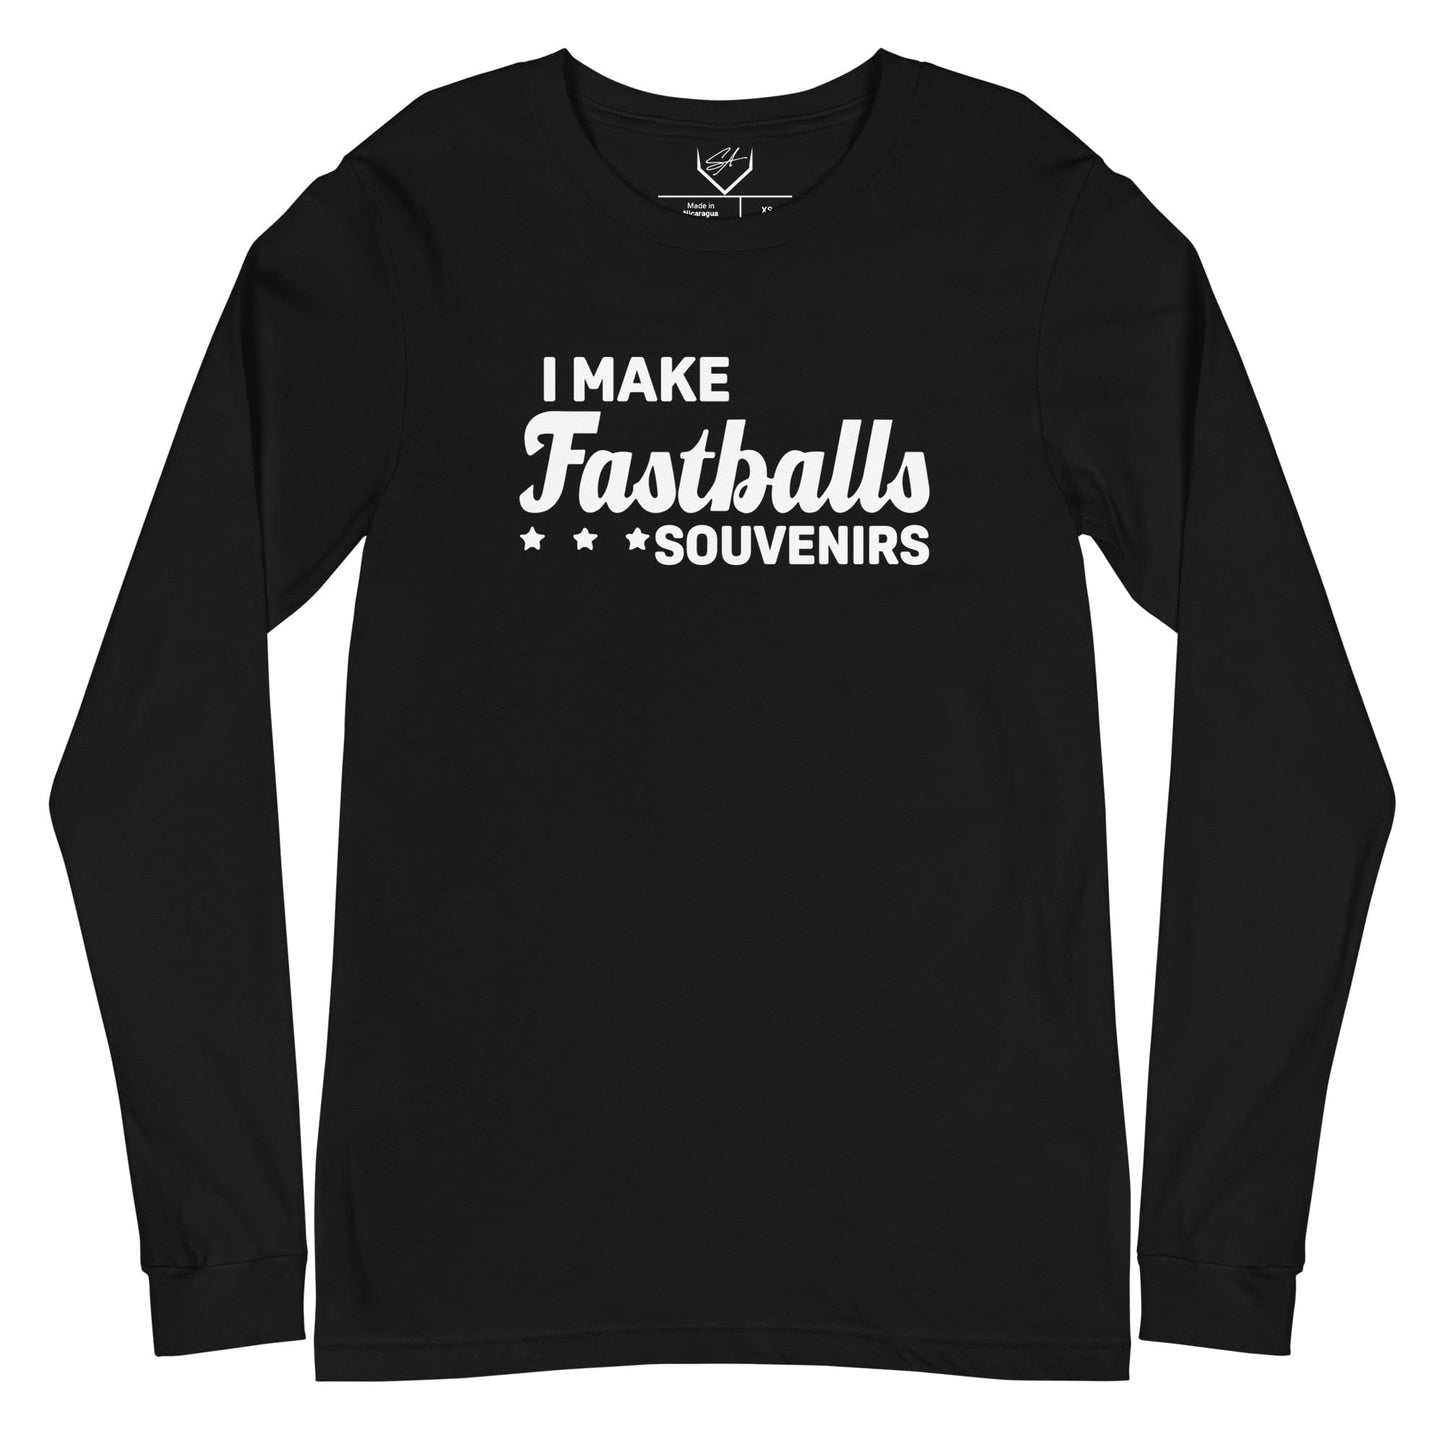 I Make Fastballs Souvenirs - Adult Long Sleeve